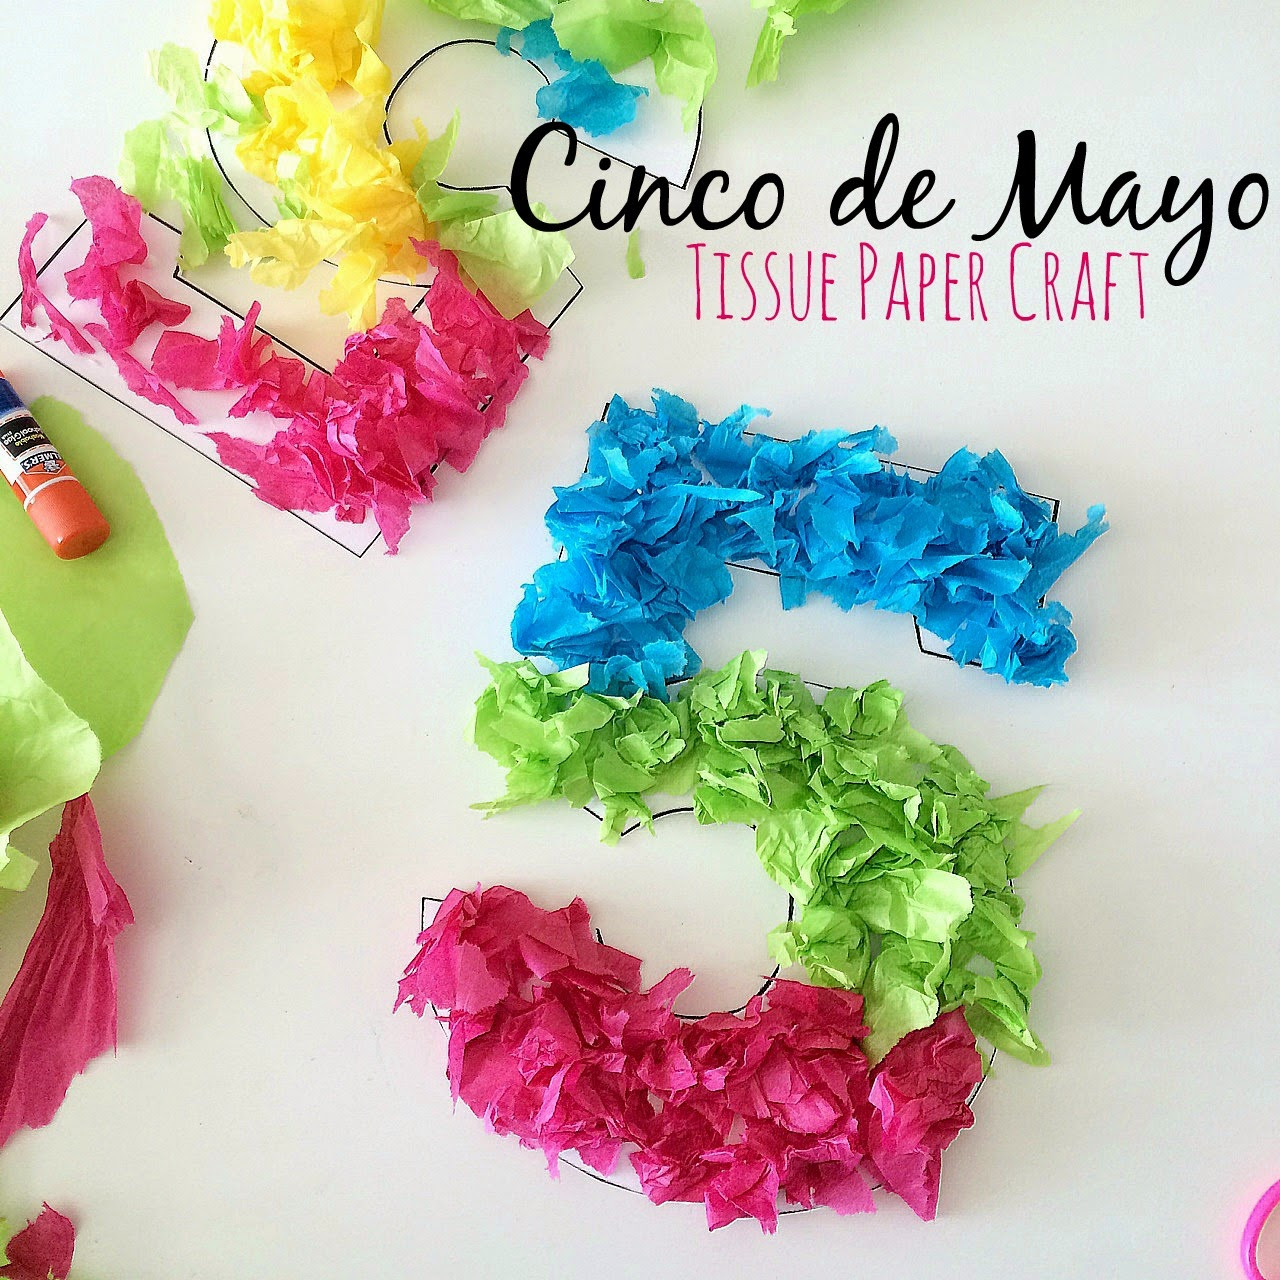 Cinco De Mayo Craft Ideas
 The Best of Cinco De Mayo Crafts Food and Party Ideas